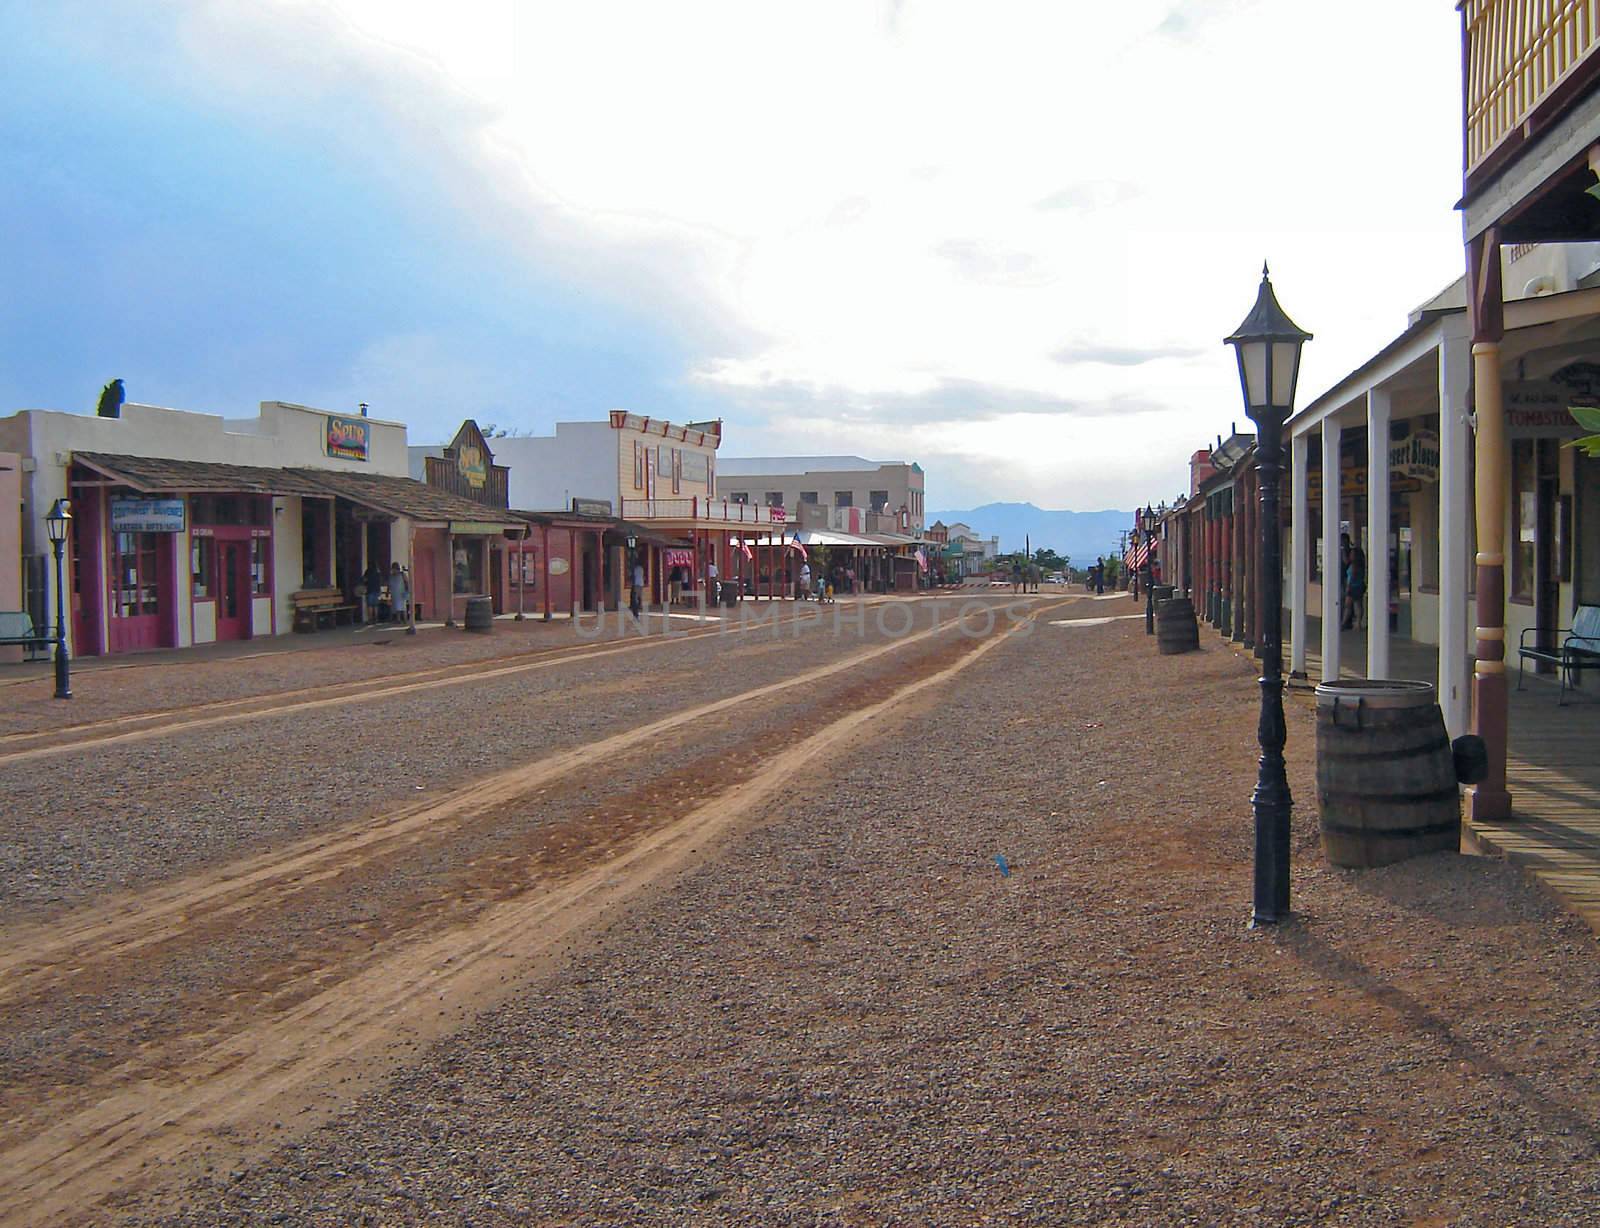 Street View of Tombstone Arizona by RefocusPhoto